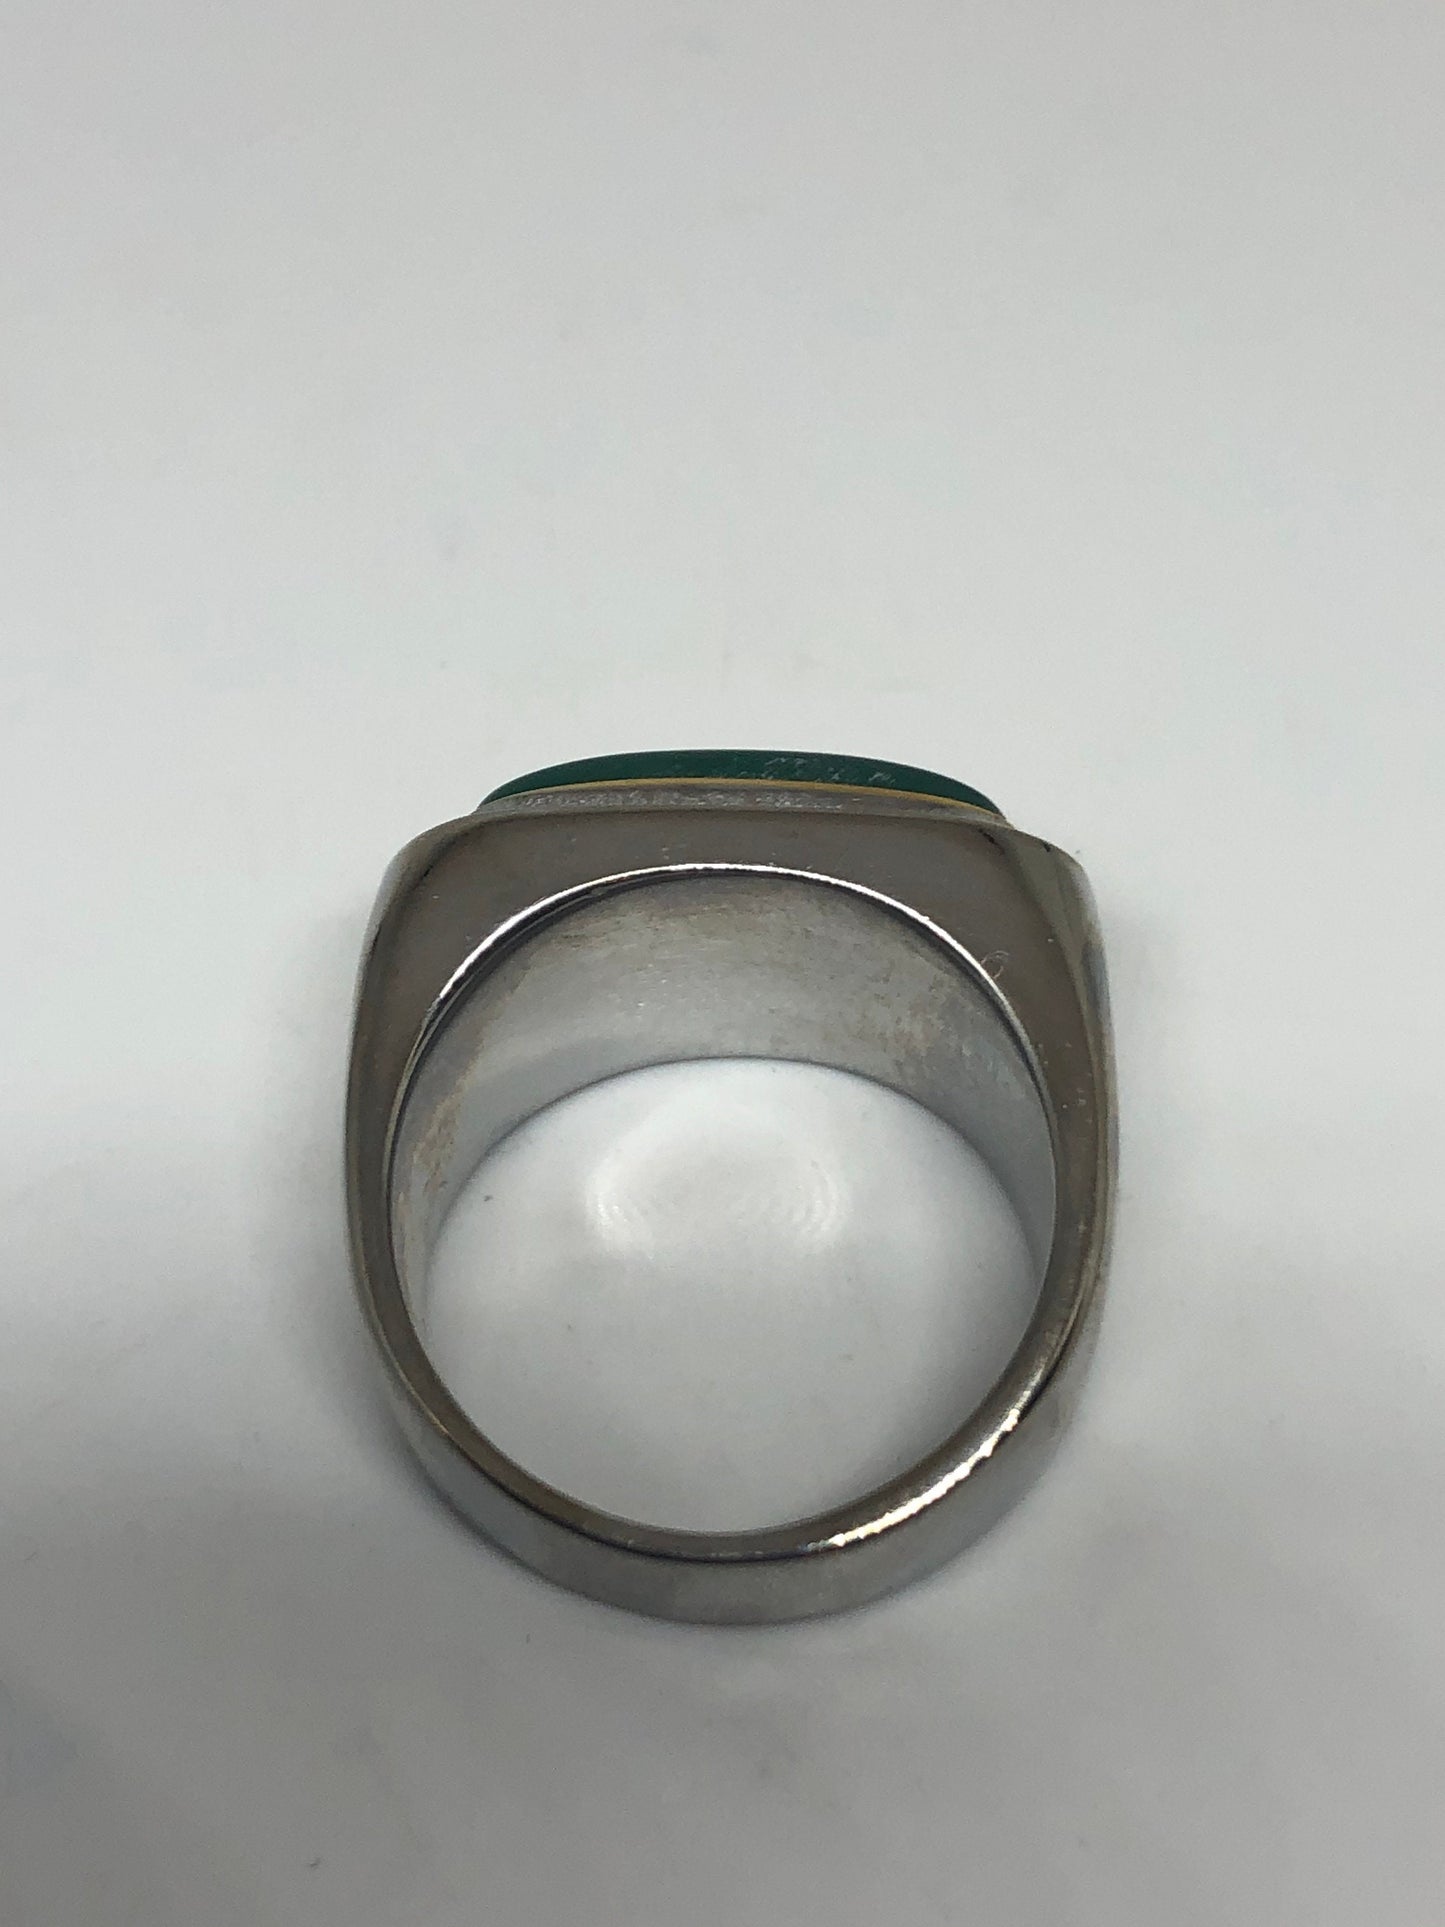 Vintage Green Onyx Golden Stainless Steel Mens Ring